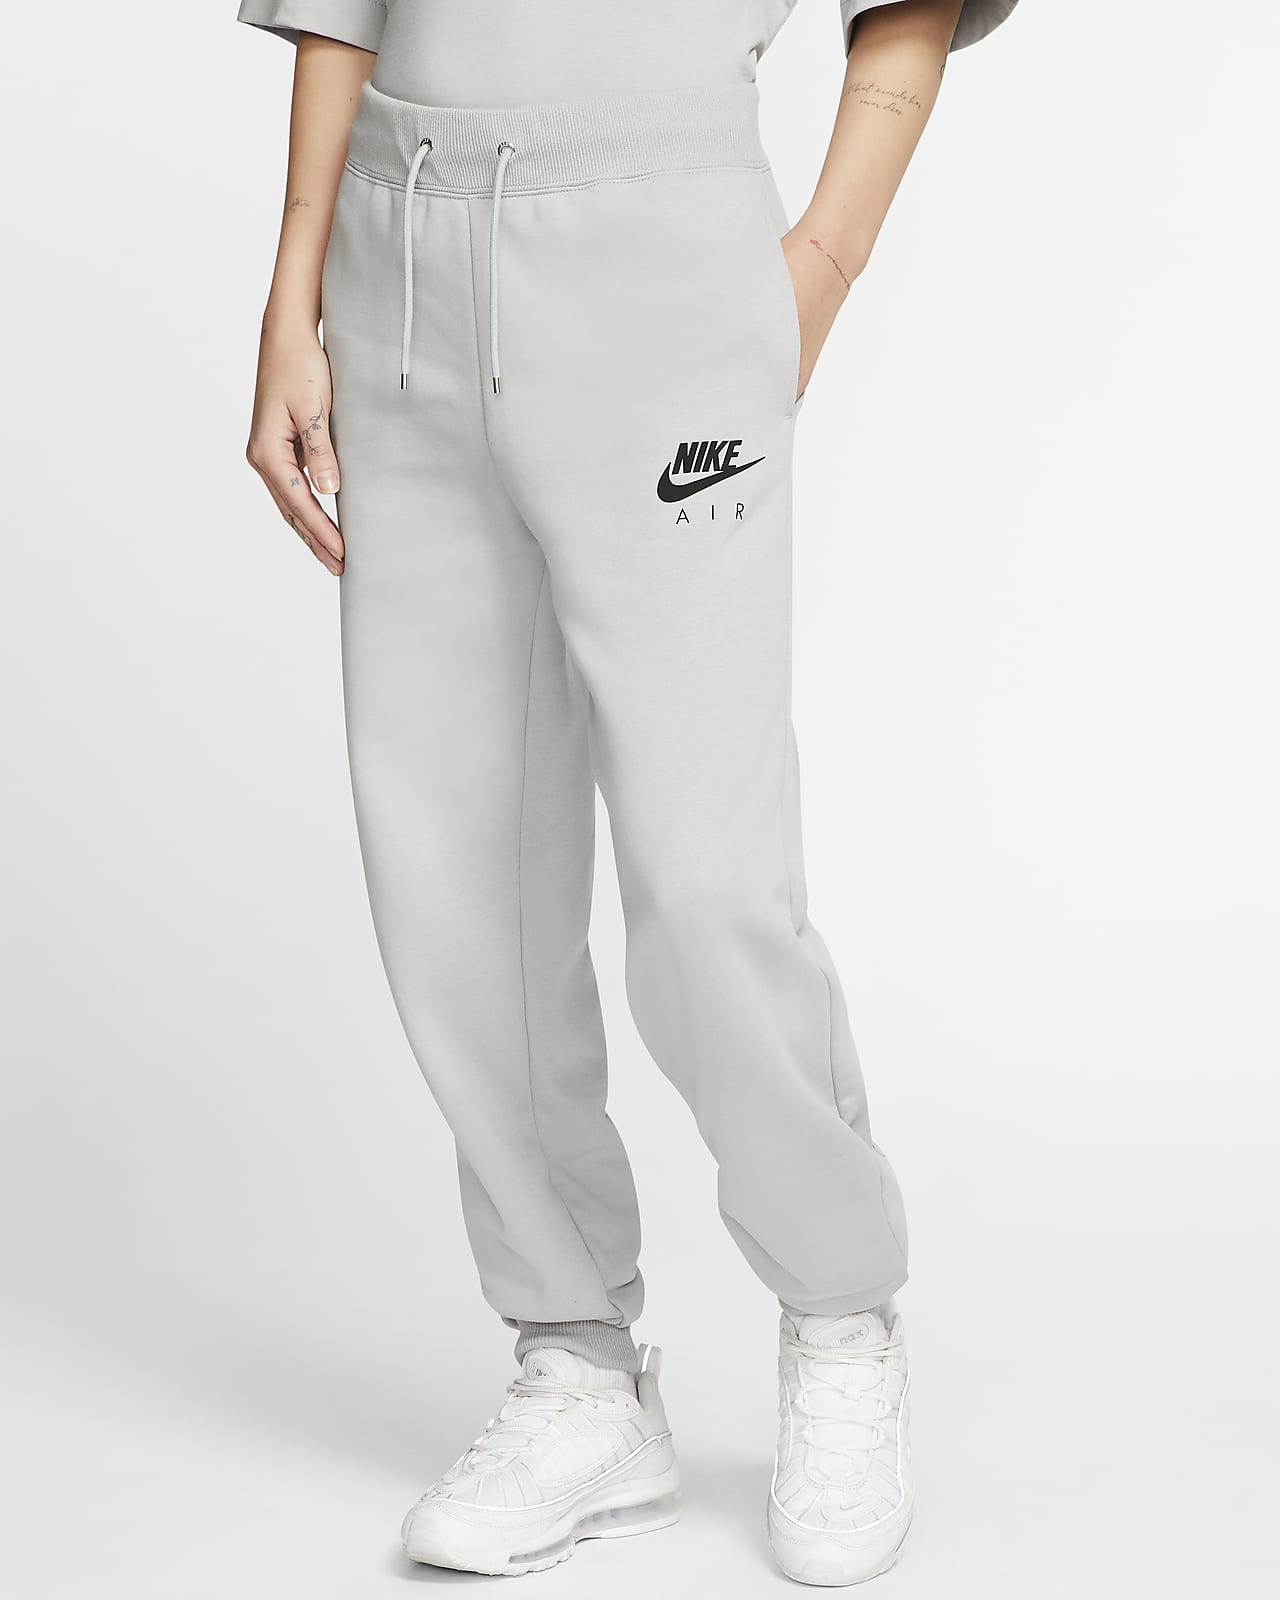 Nike Air Women's Fleece Trousers. Nike AT